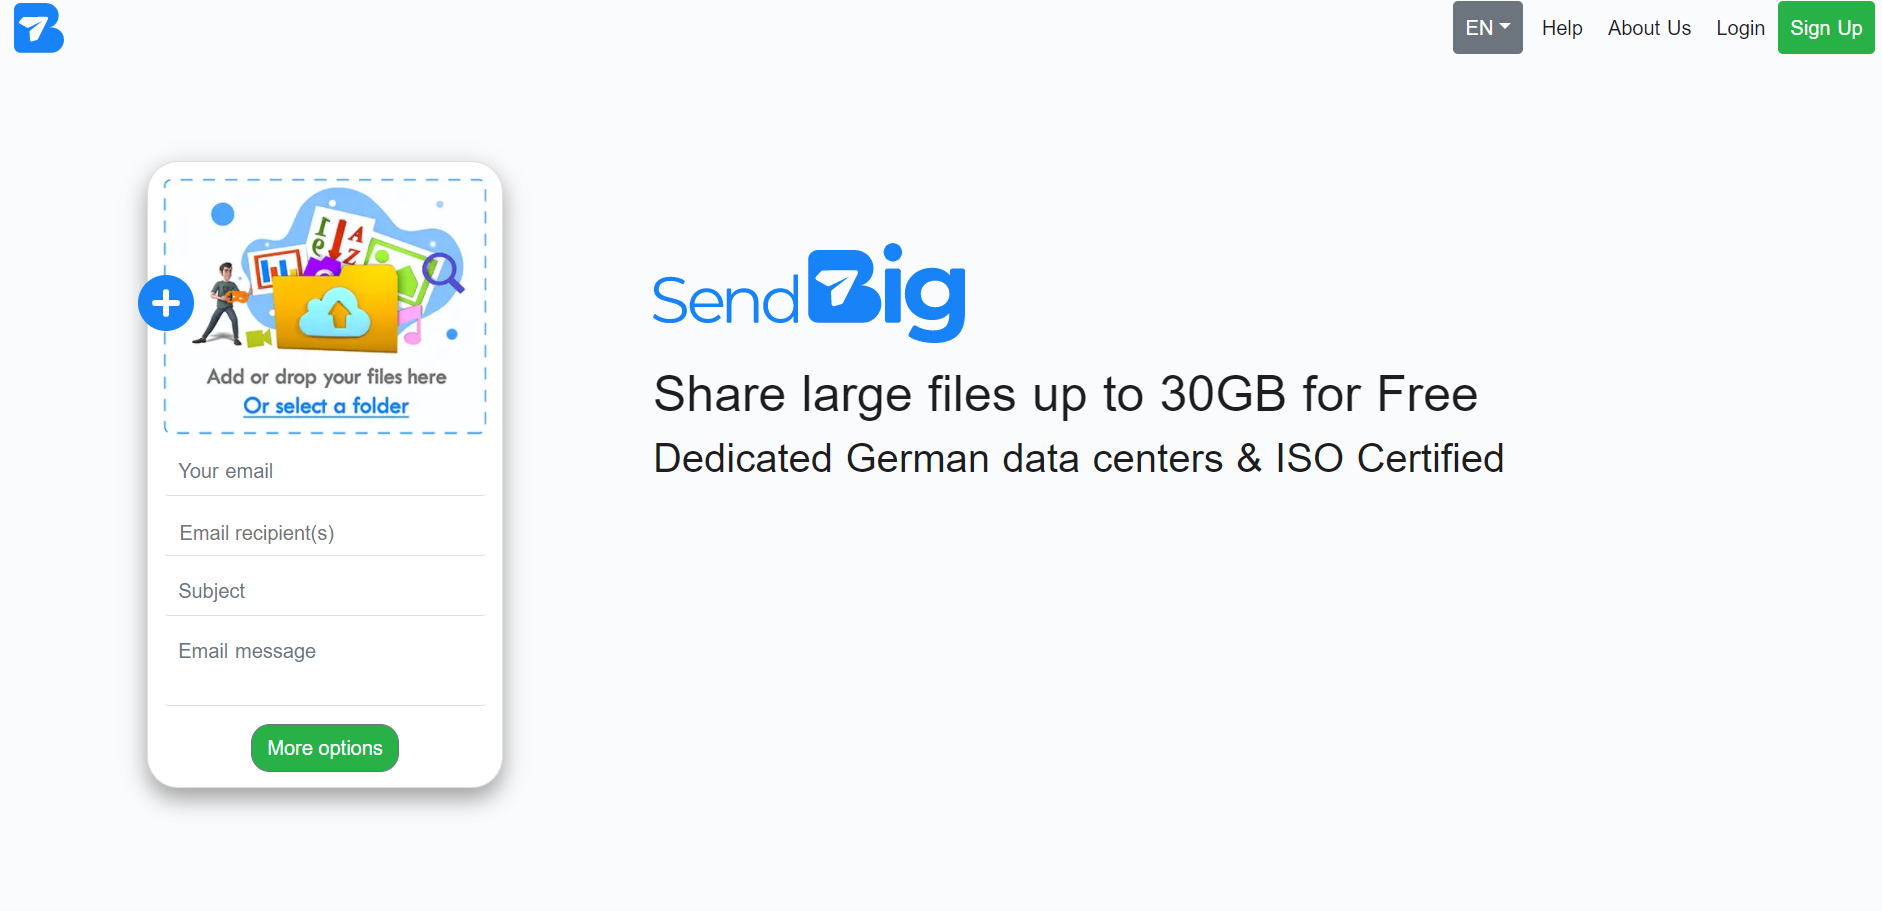 SendBig - Homepage card for uploading files